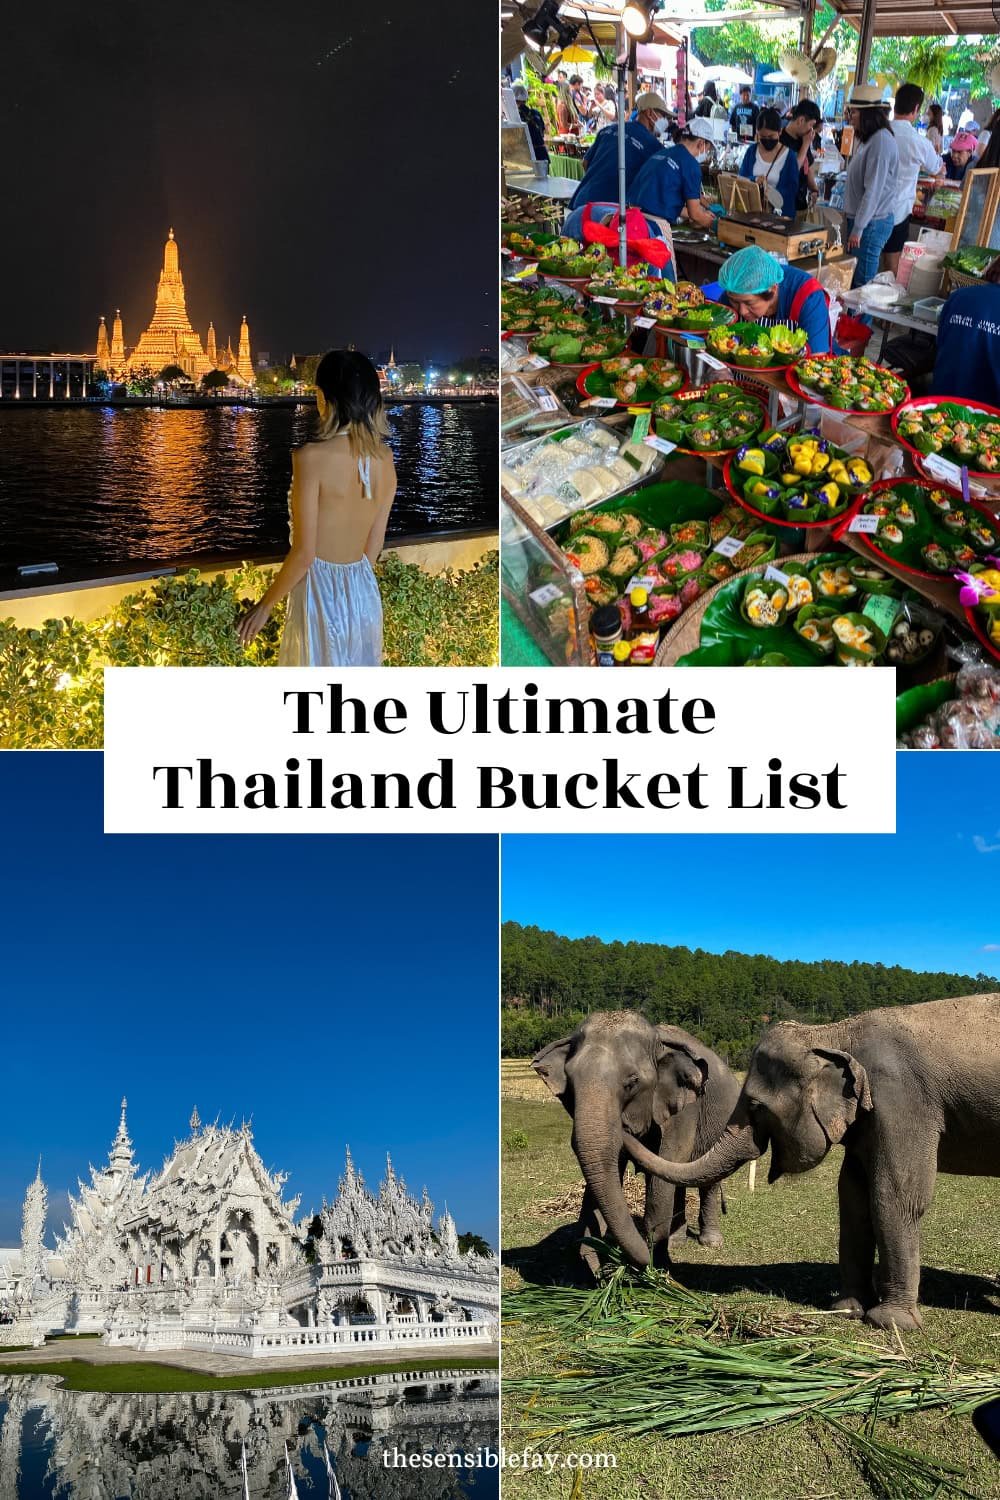 The Ultimate Thailand Bucket List Pin.jpg